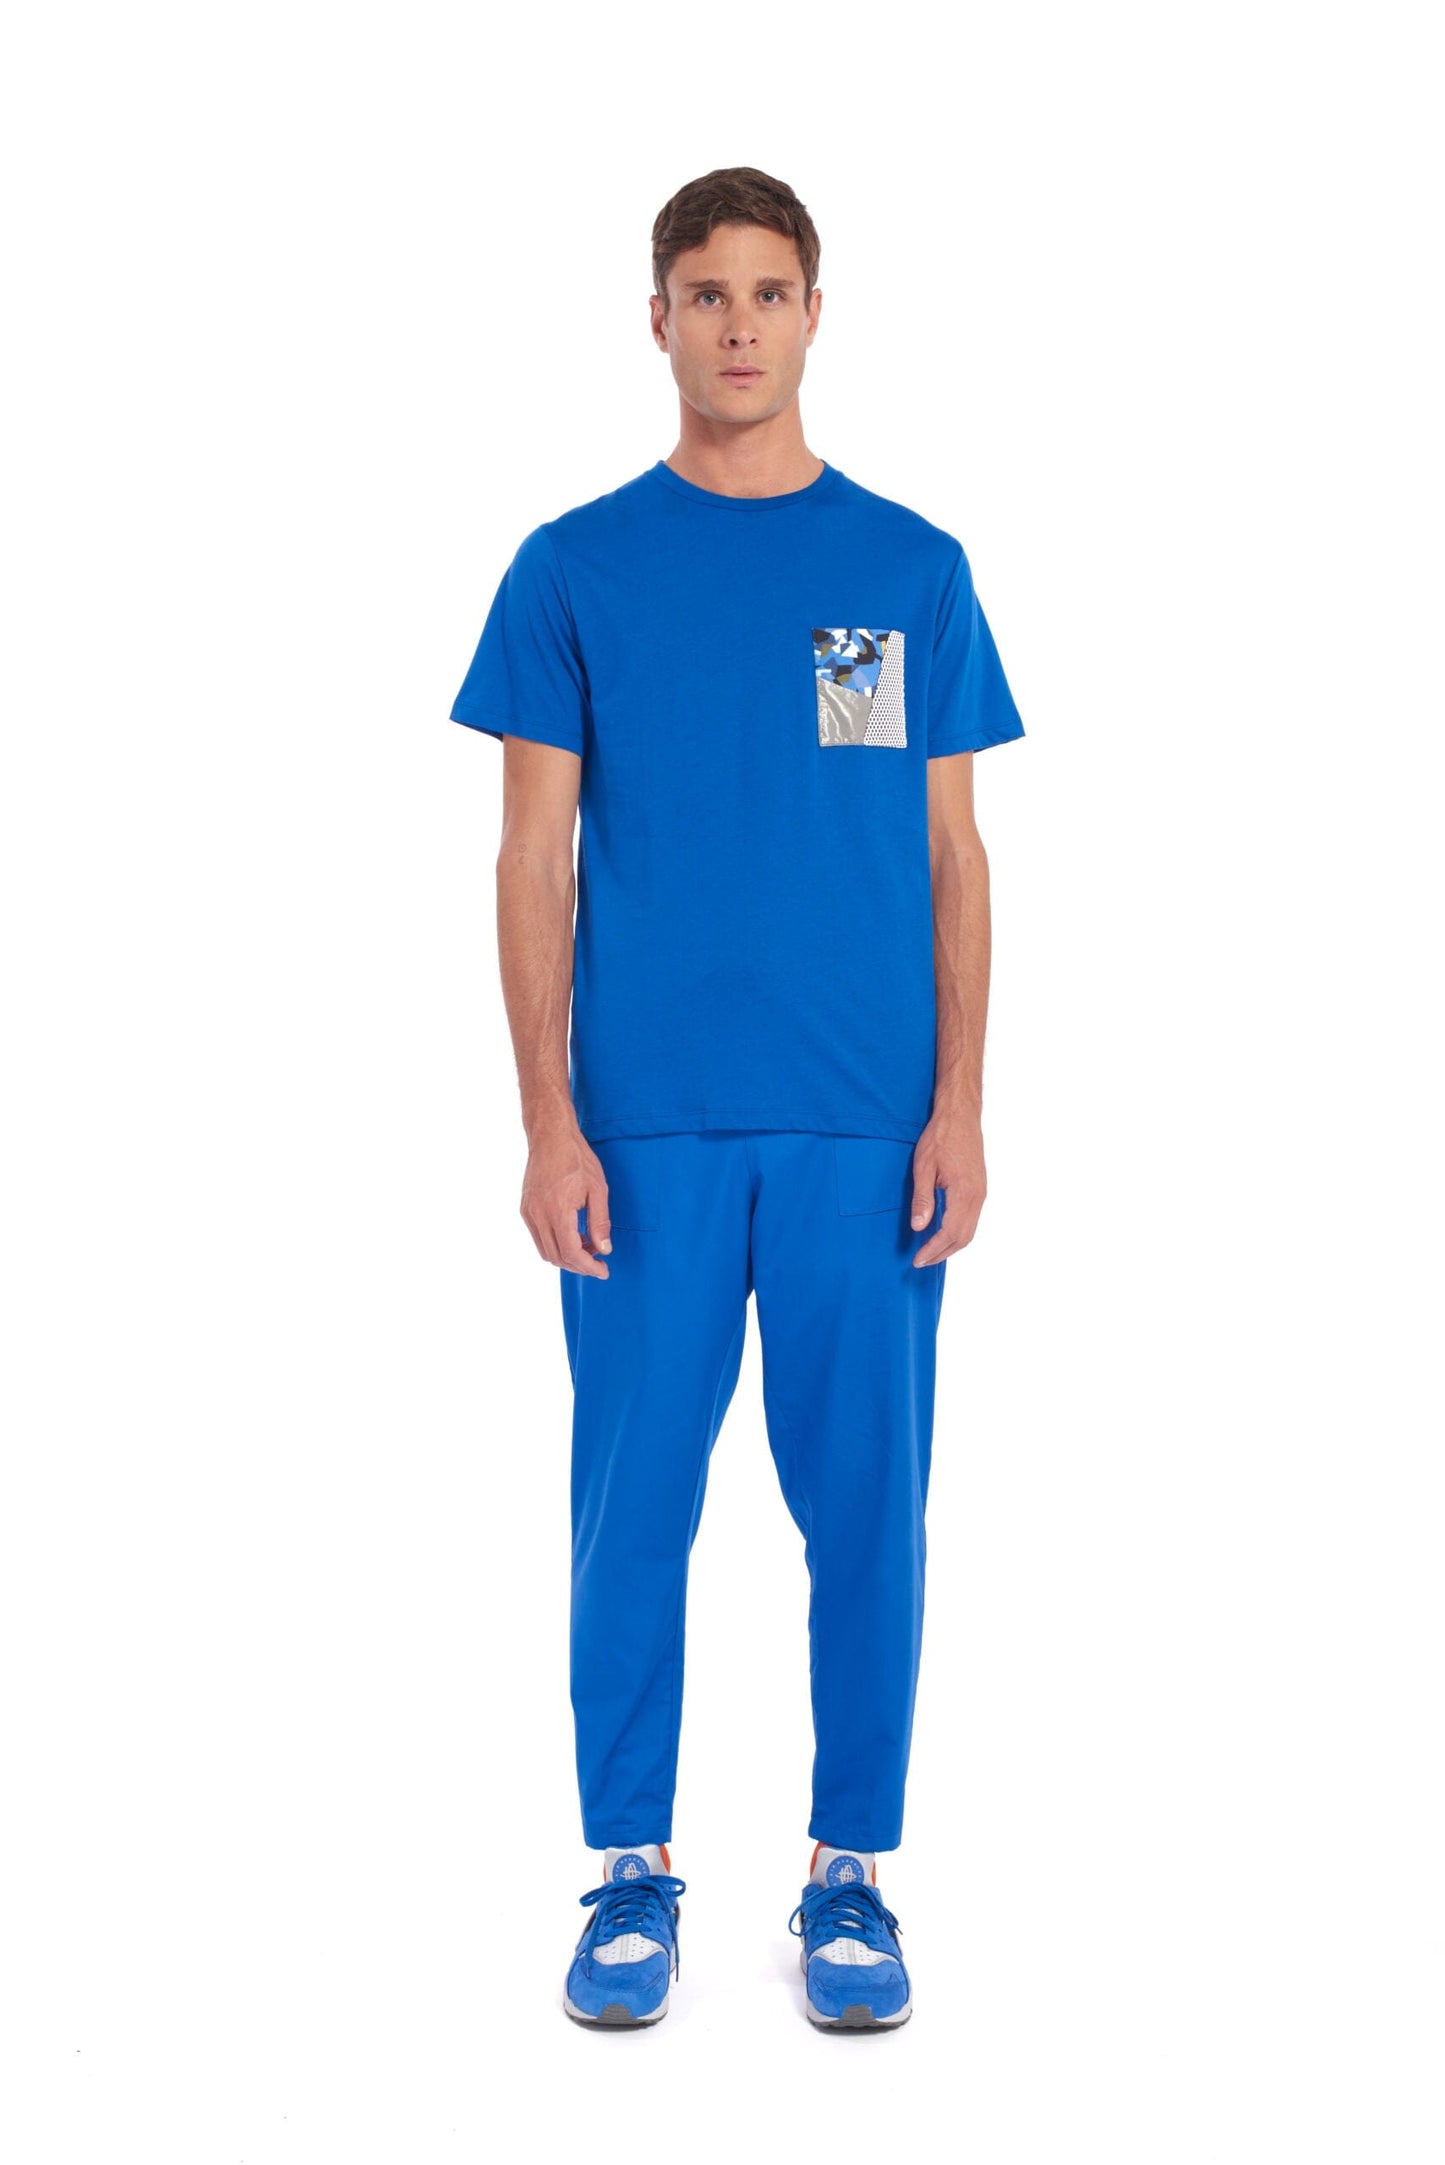 Jimba - Blue T-shirt LaurenceAirline 